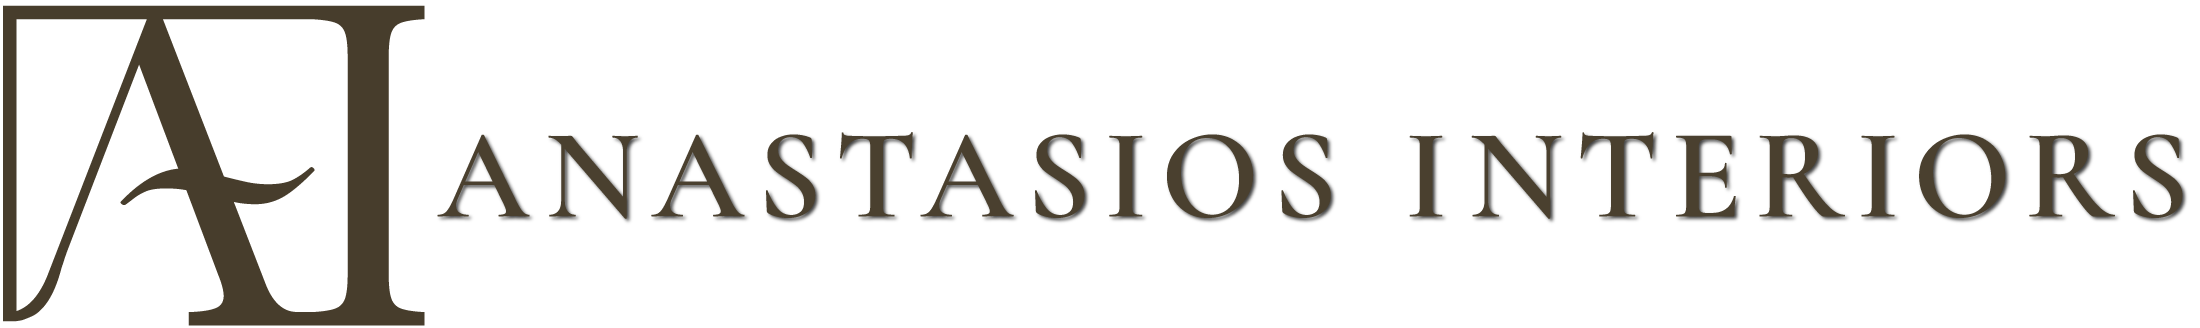 Anastasios Interiors logo